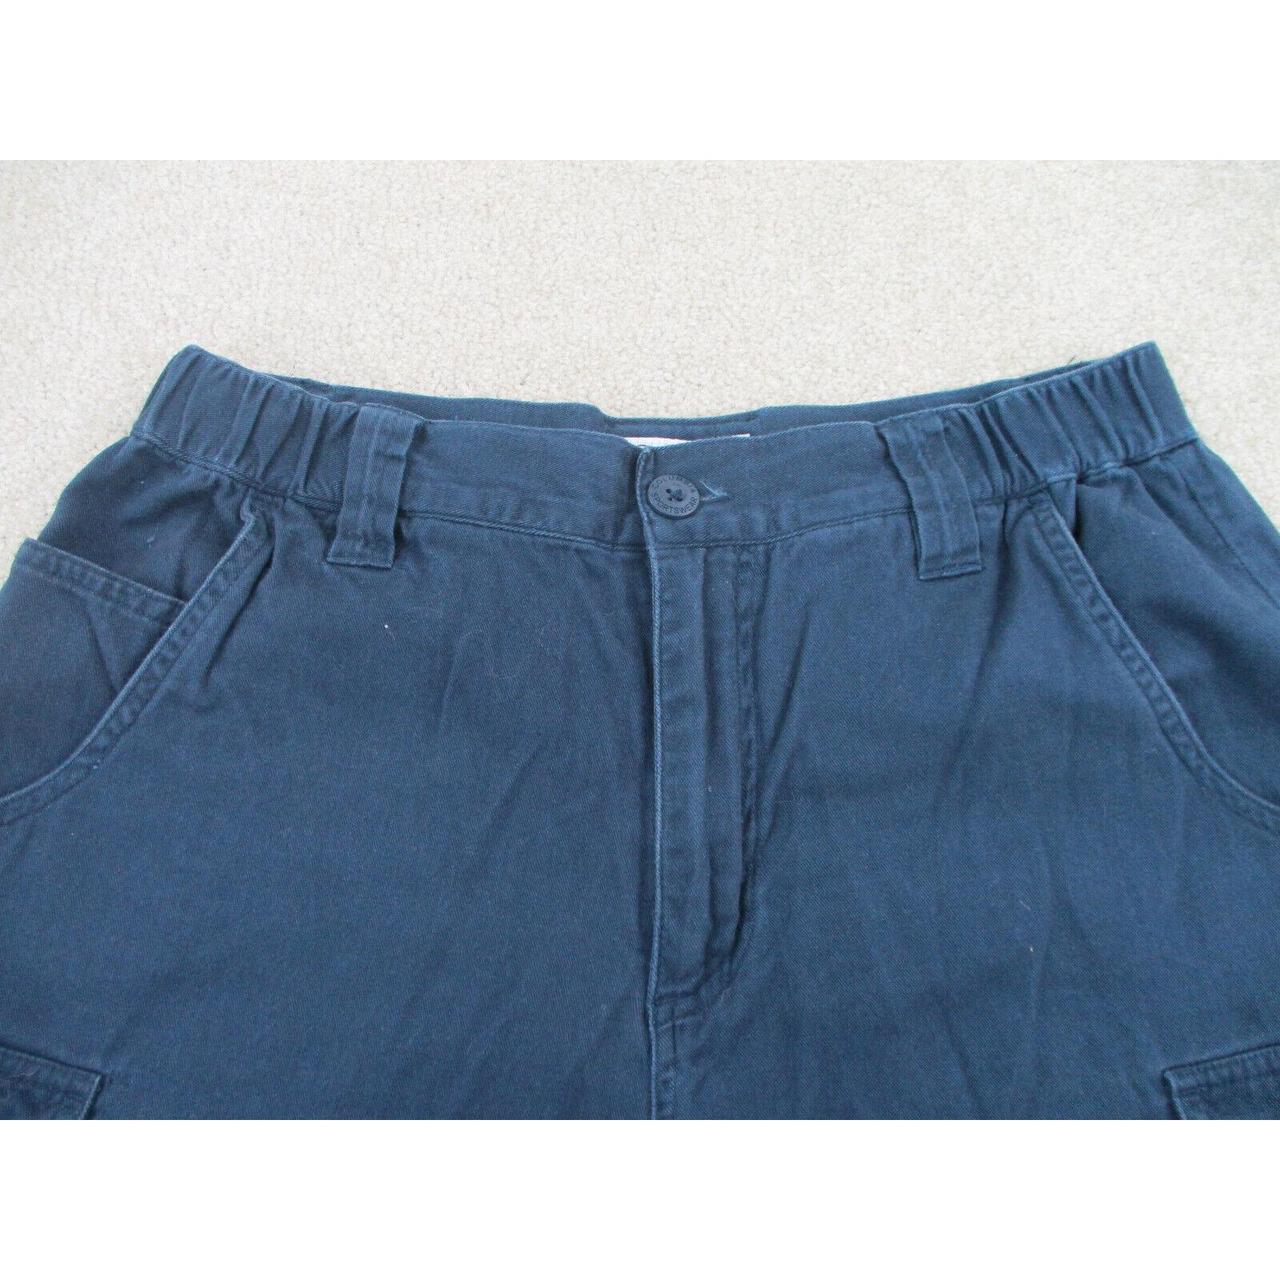 Product Image 3 - Columbia Shorts Men 30 Blue